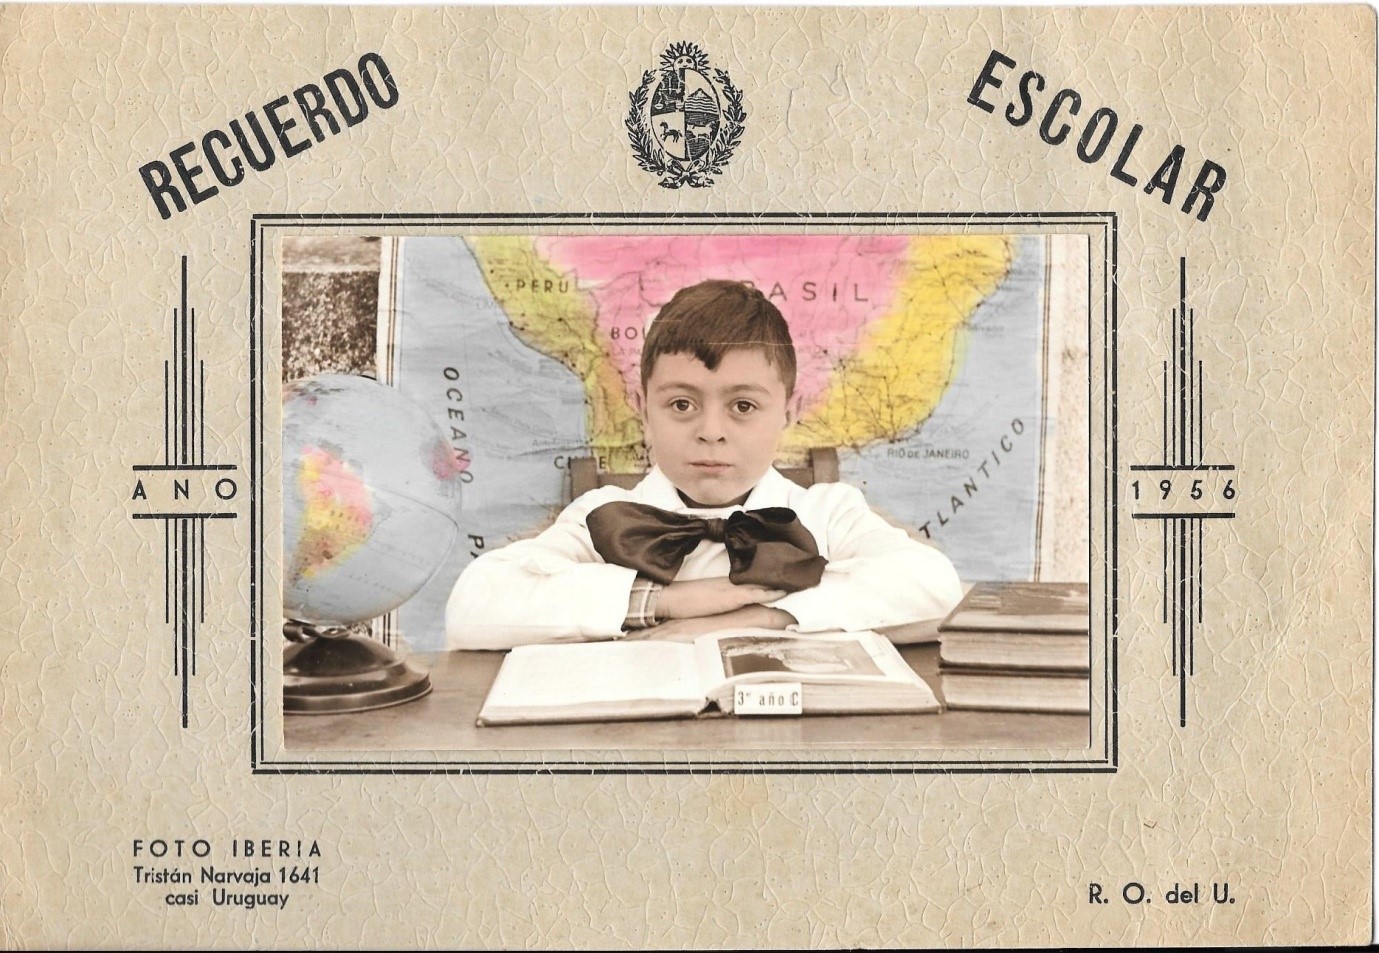 [Leon at the age of 8 in school uniform in Uruguay.]